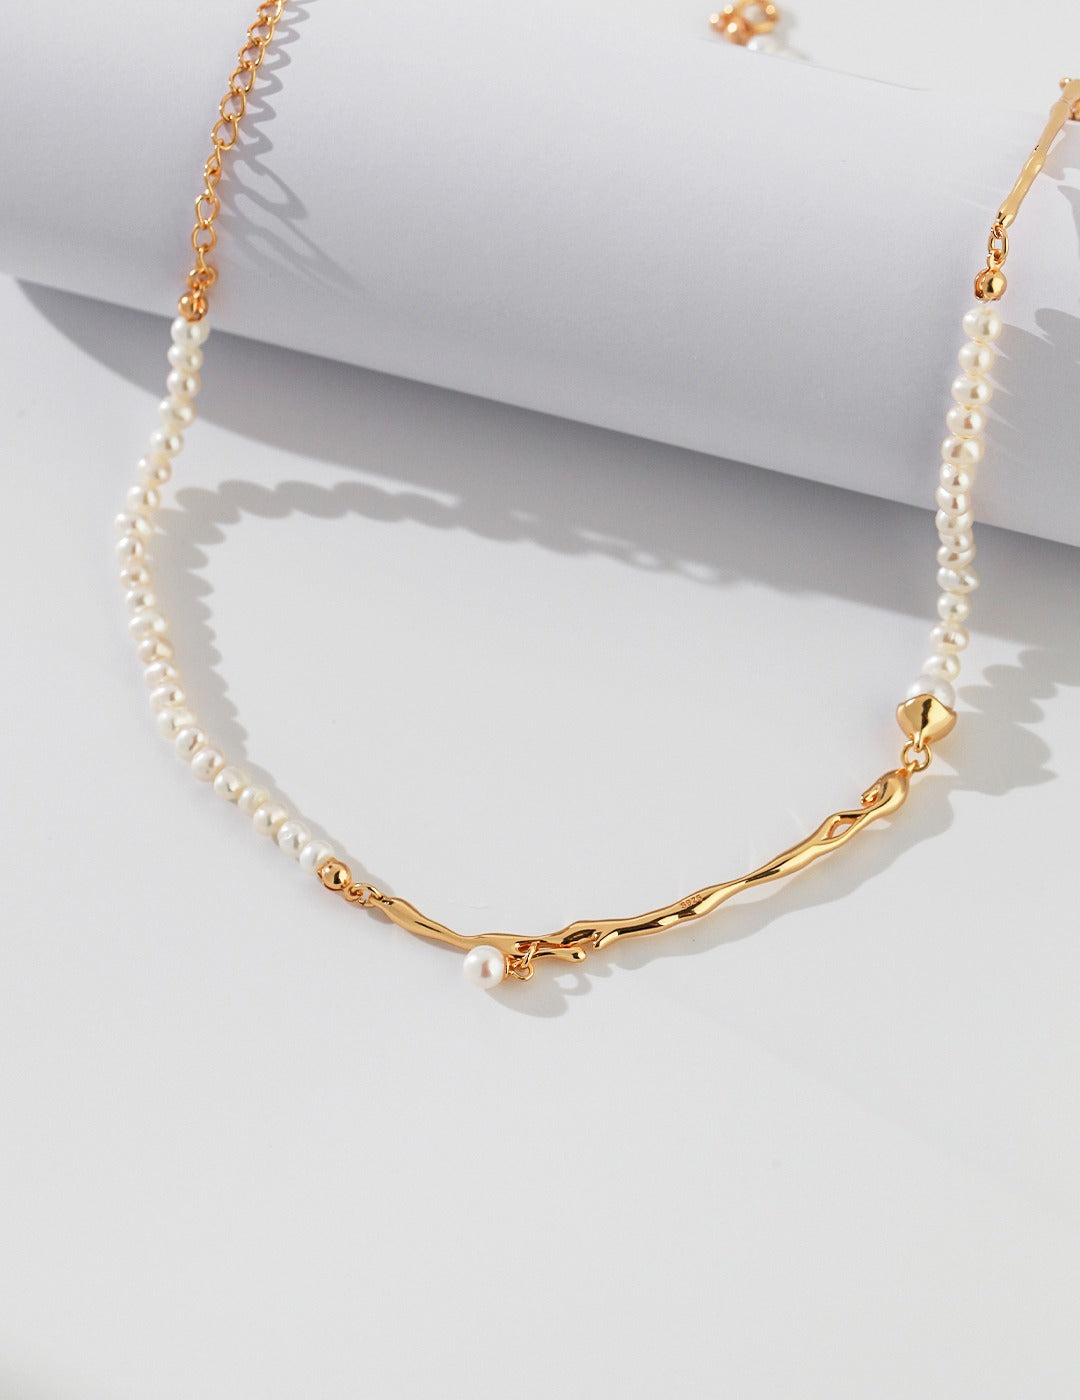 Contemporary Chic Pearl Necklace with Unique Fluid Design